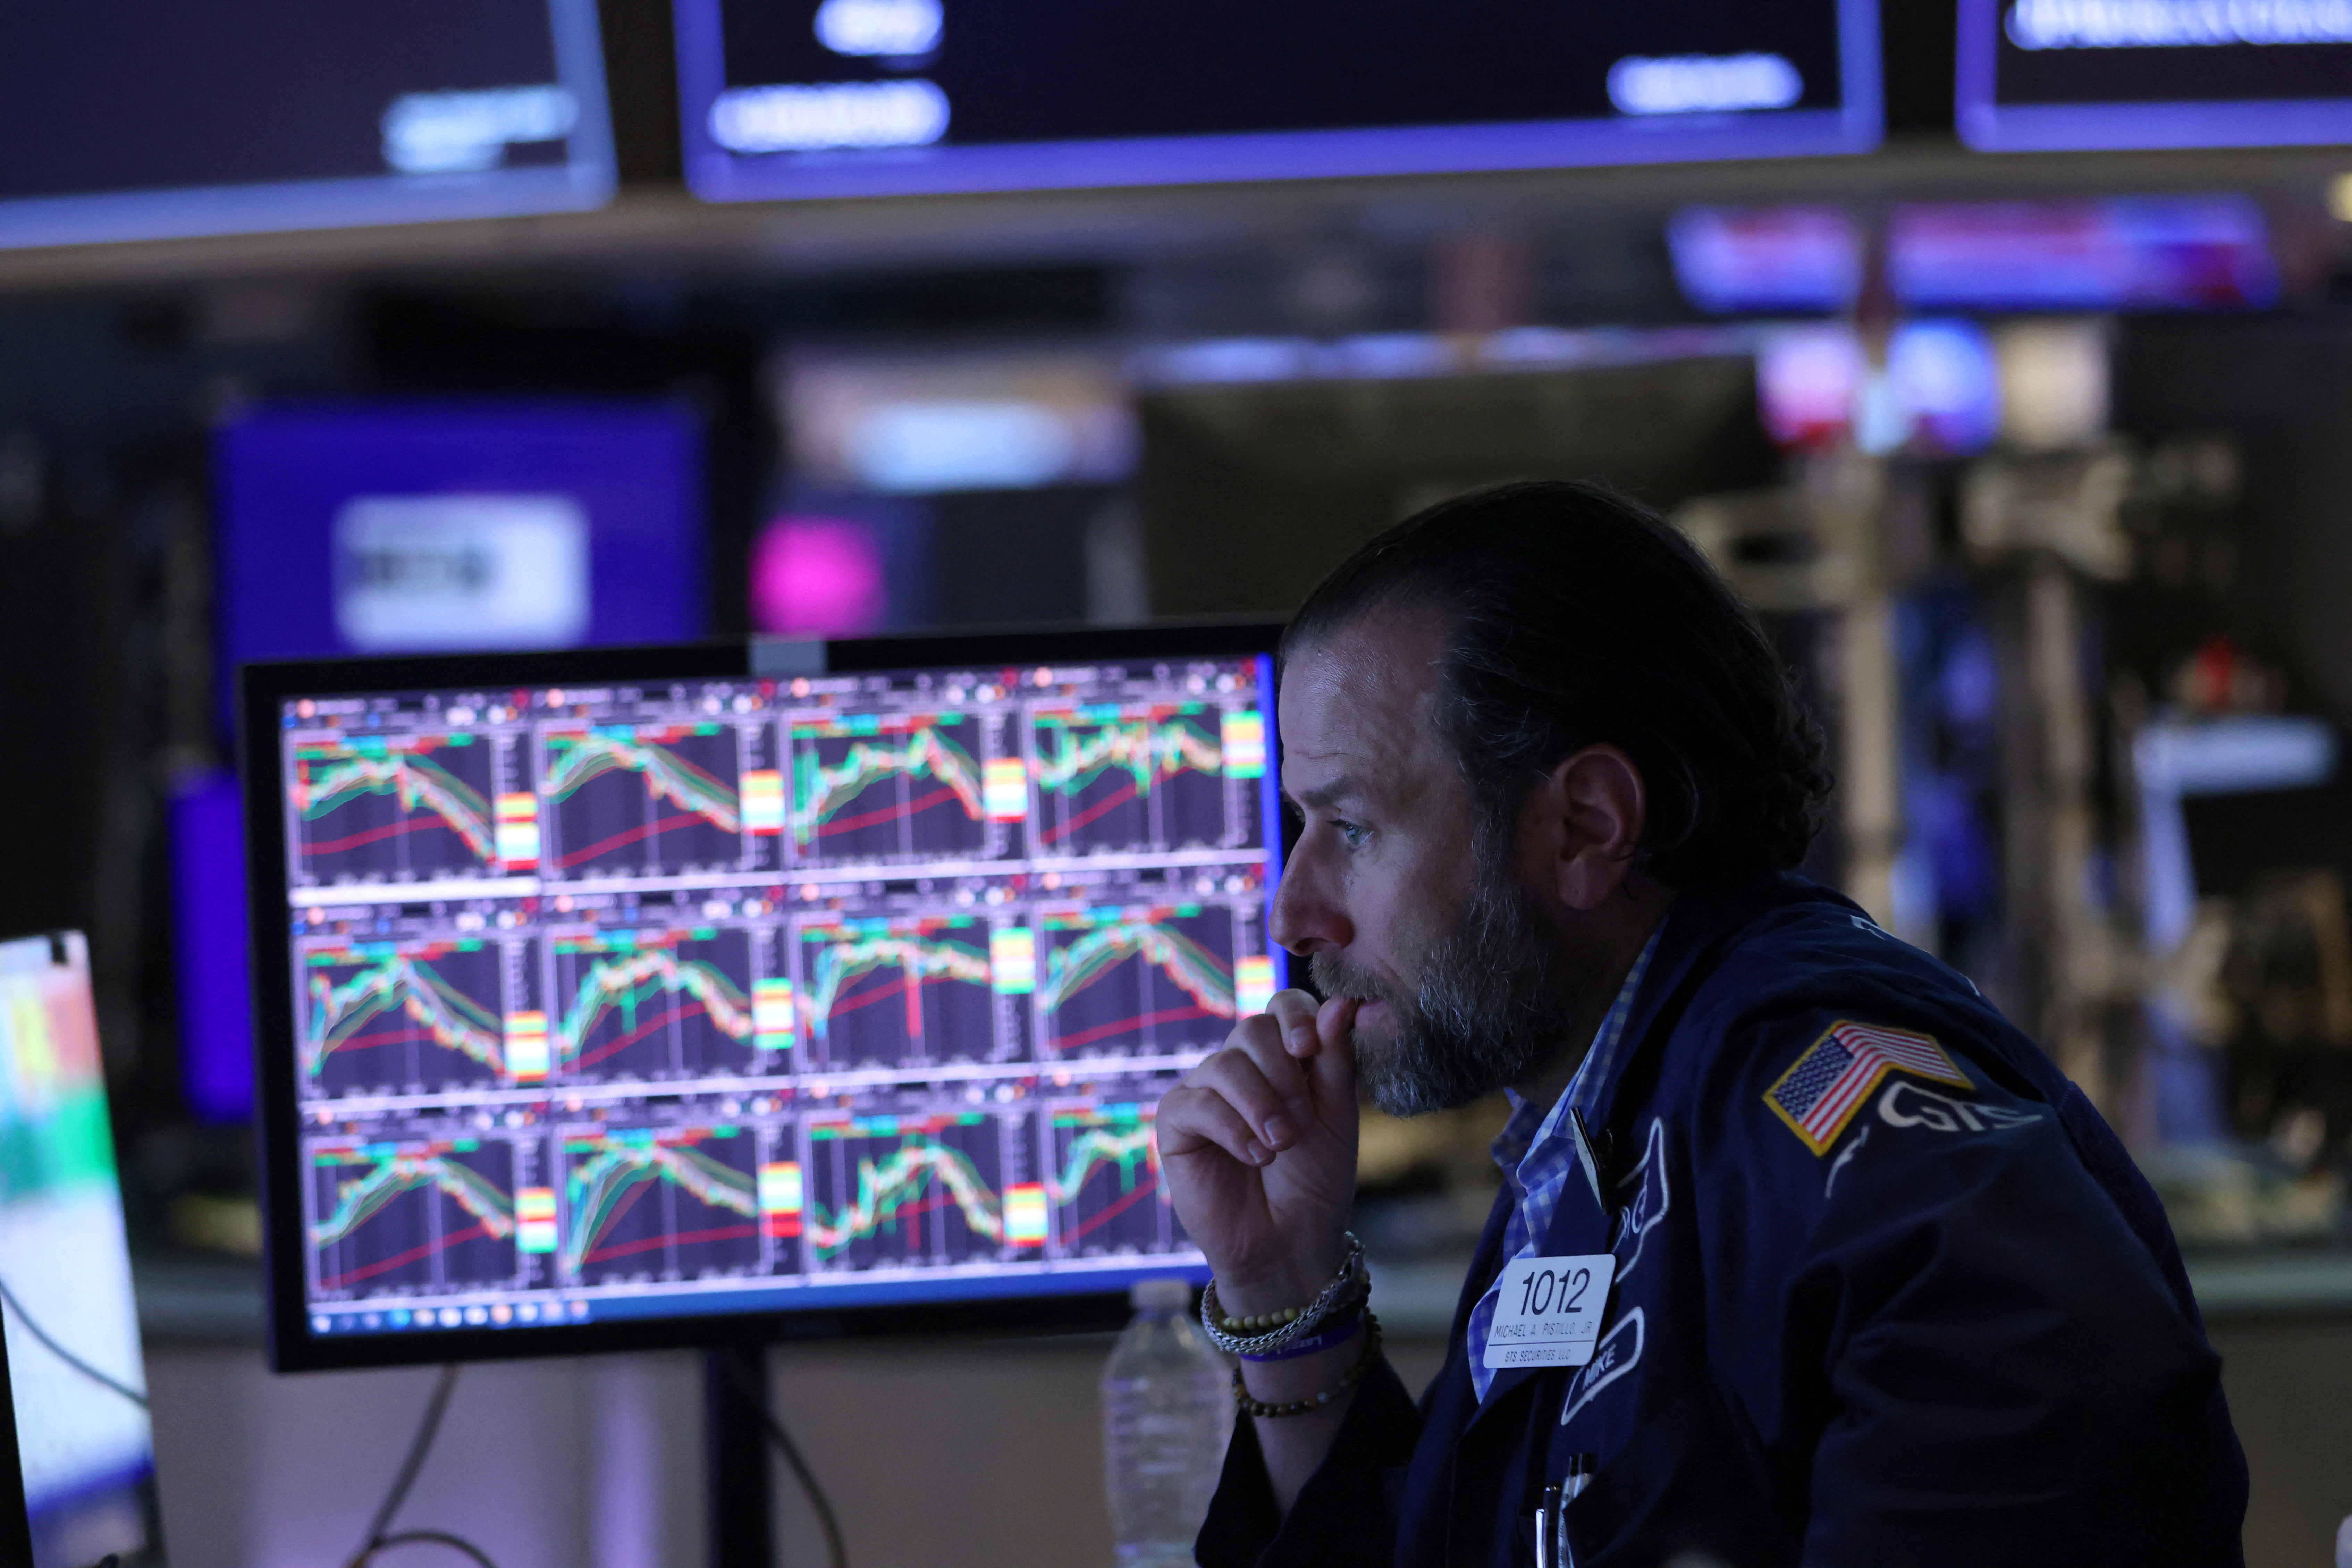 Analysis: Wall Street heavyweights warn of pain ahead despite market's recent reprieve